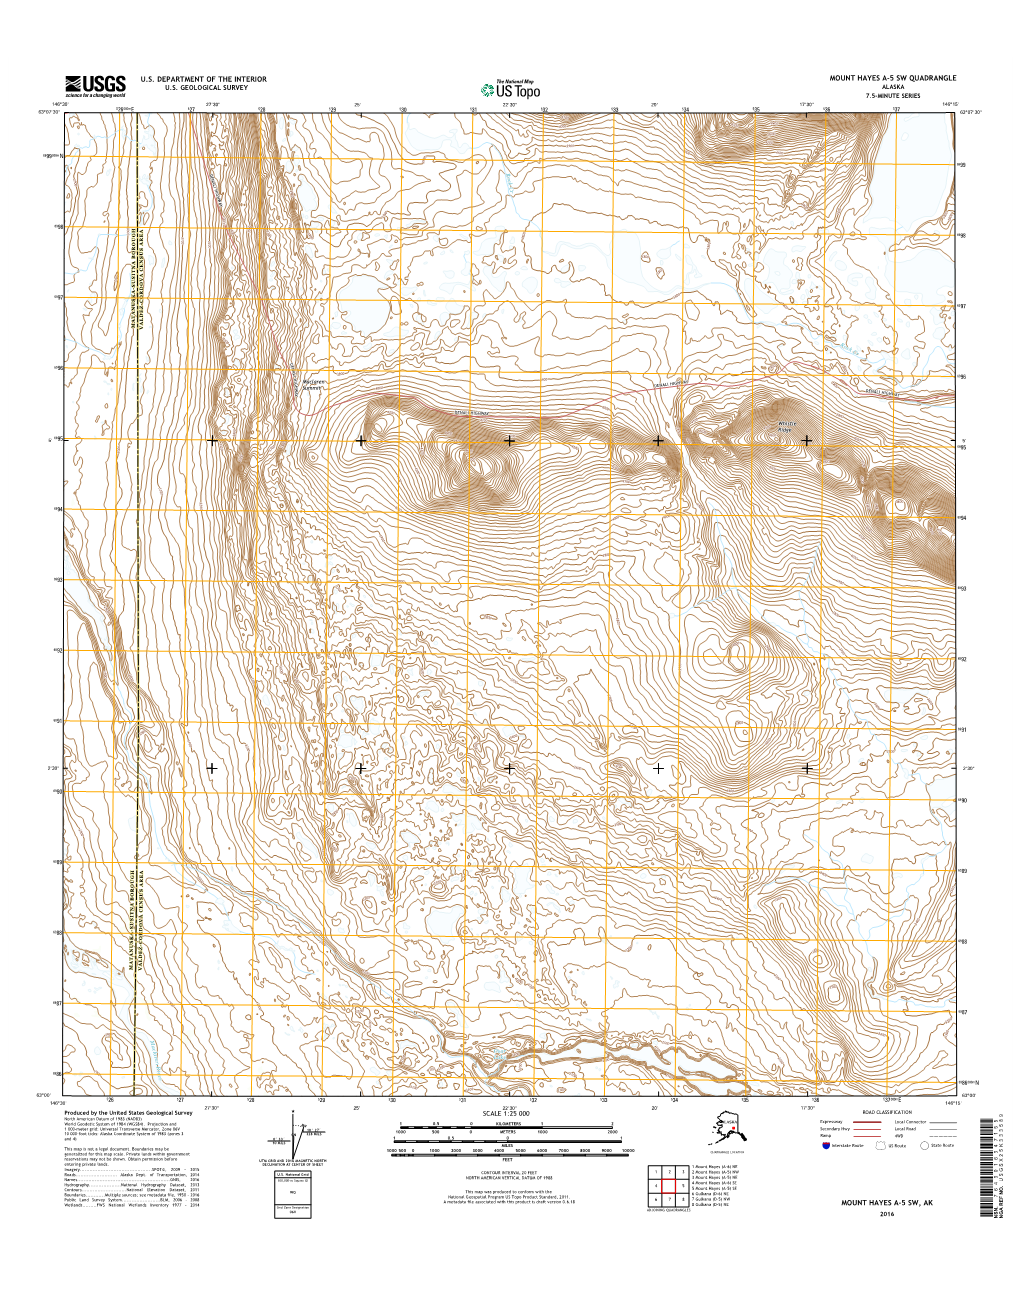 USGS 7.5-Minute Image Map for Mount Hayes A-5 SW, Alaska